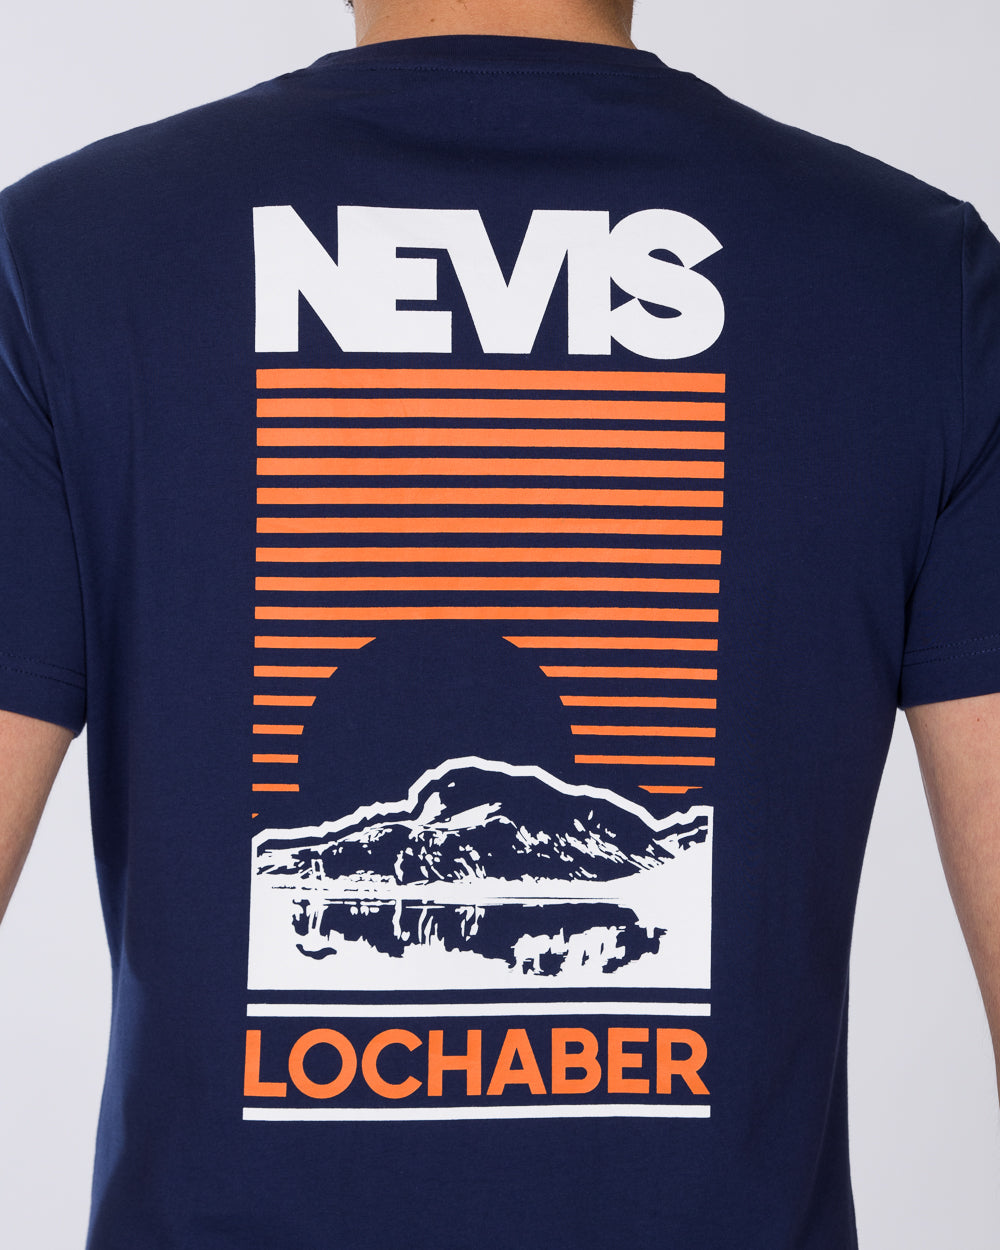 2t Printed Tall T-Shirt (nevis navy)